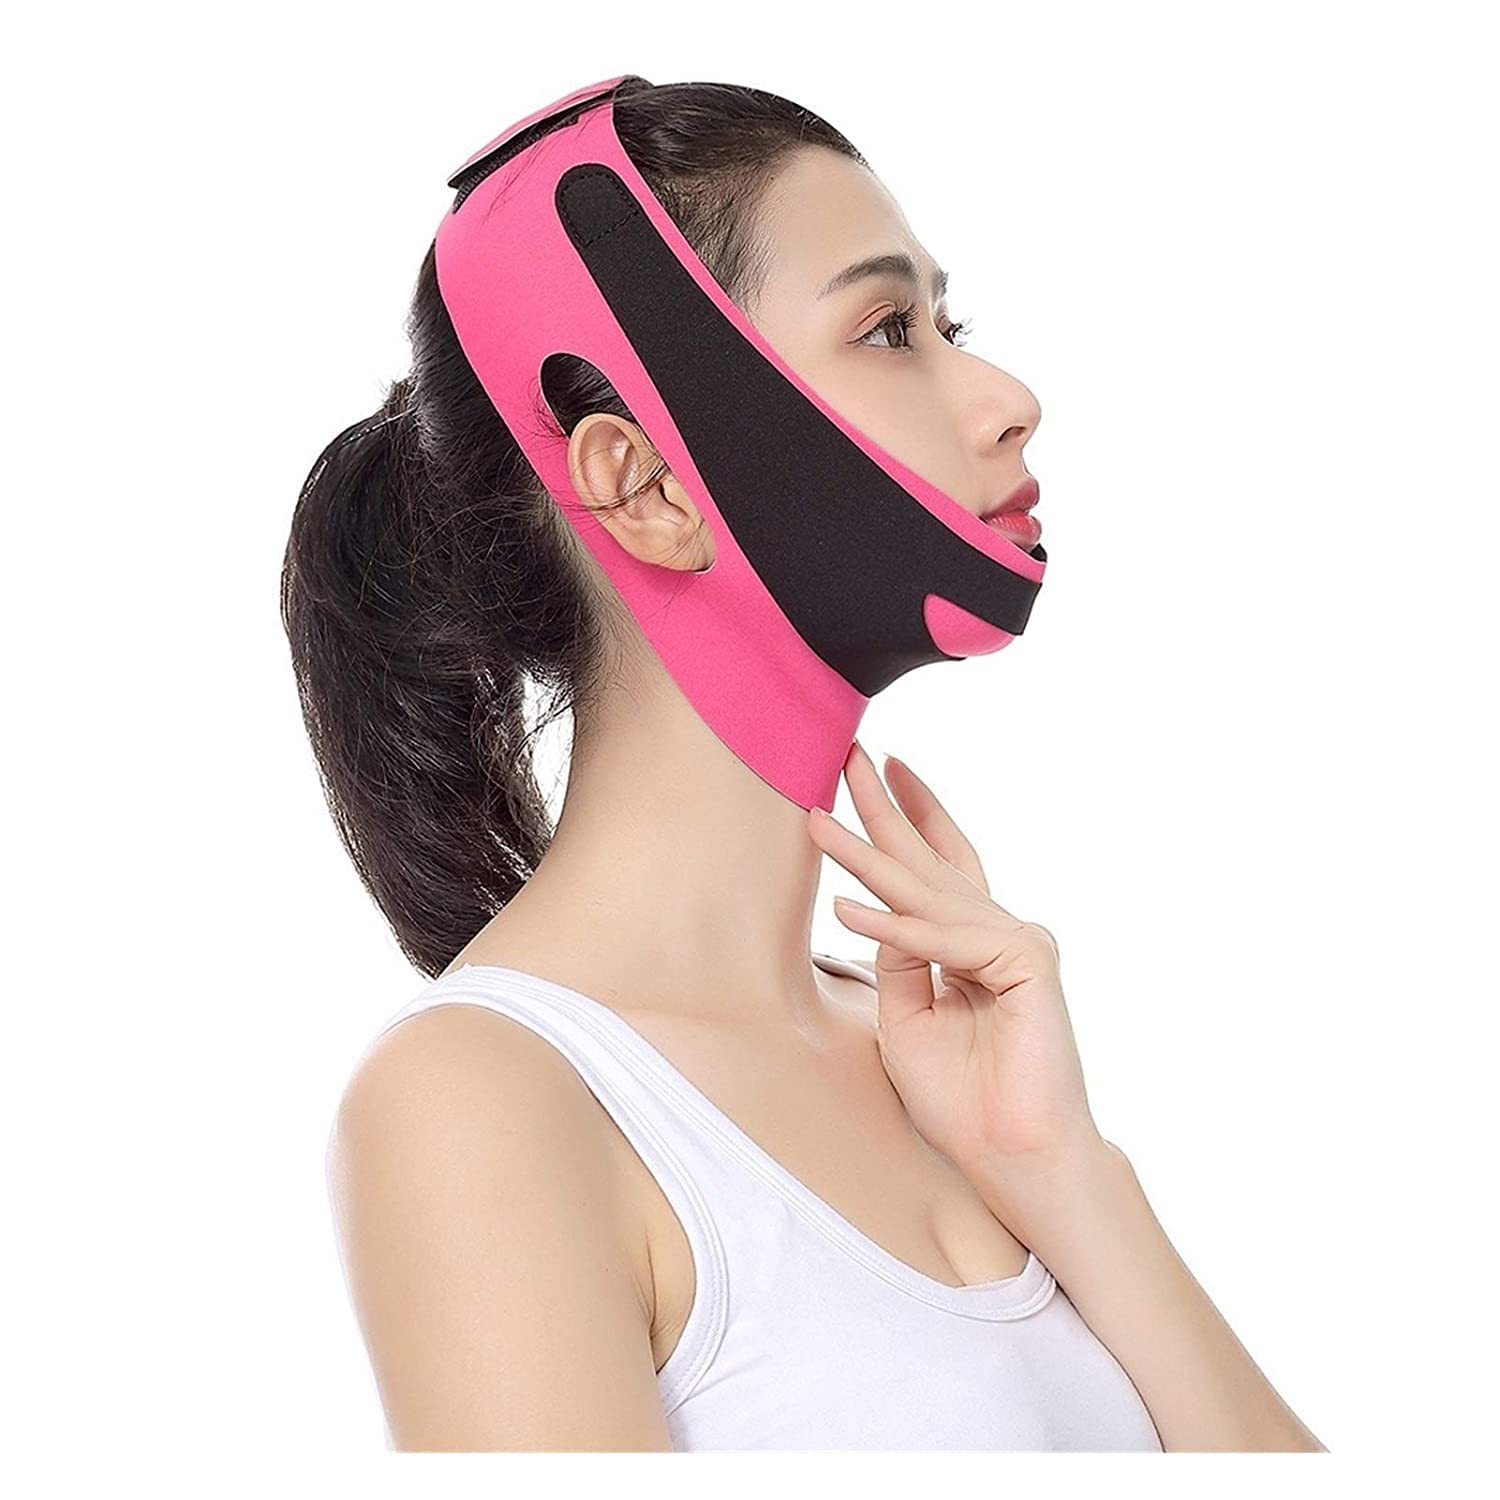 ParaFaciem Reusable V Line lifting Mask Facial Slimming Strap - Double Chin  Reducer - Chin Up Mask Face Lifting Belt - V Shaped Slimming Face Mask 